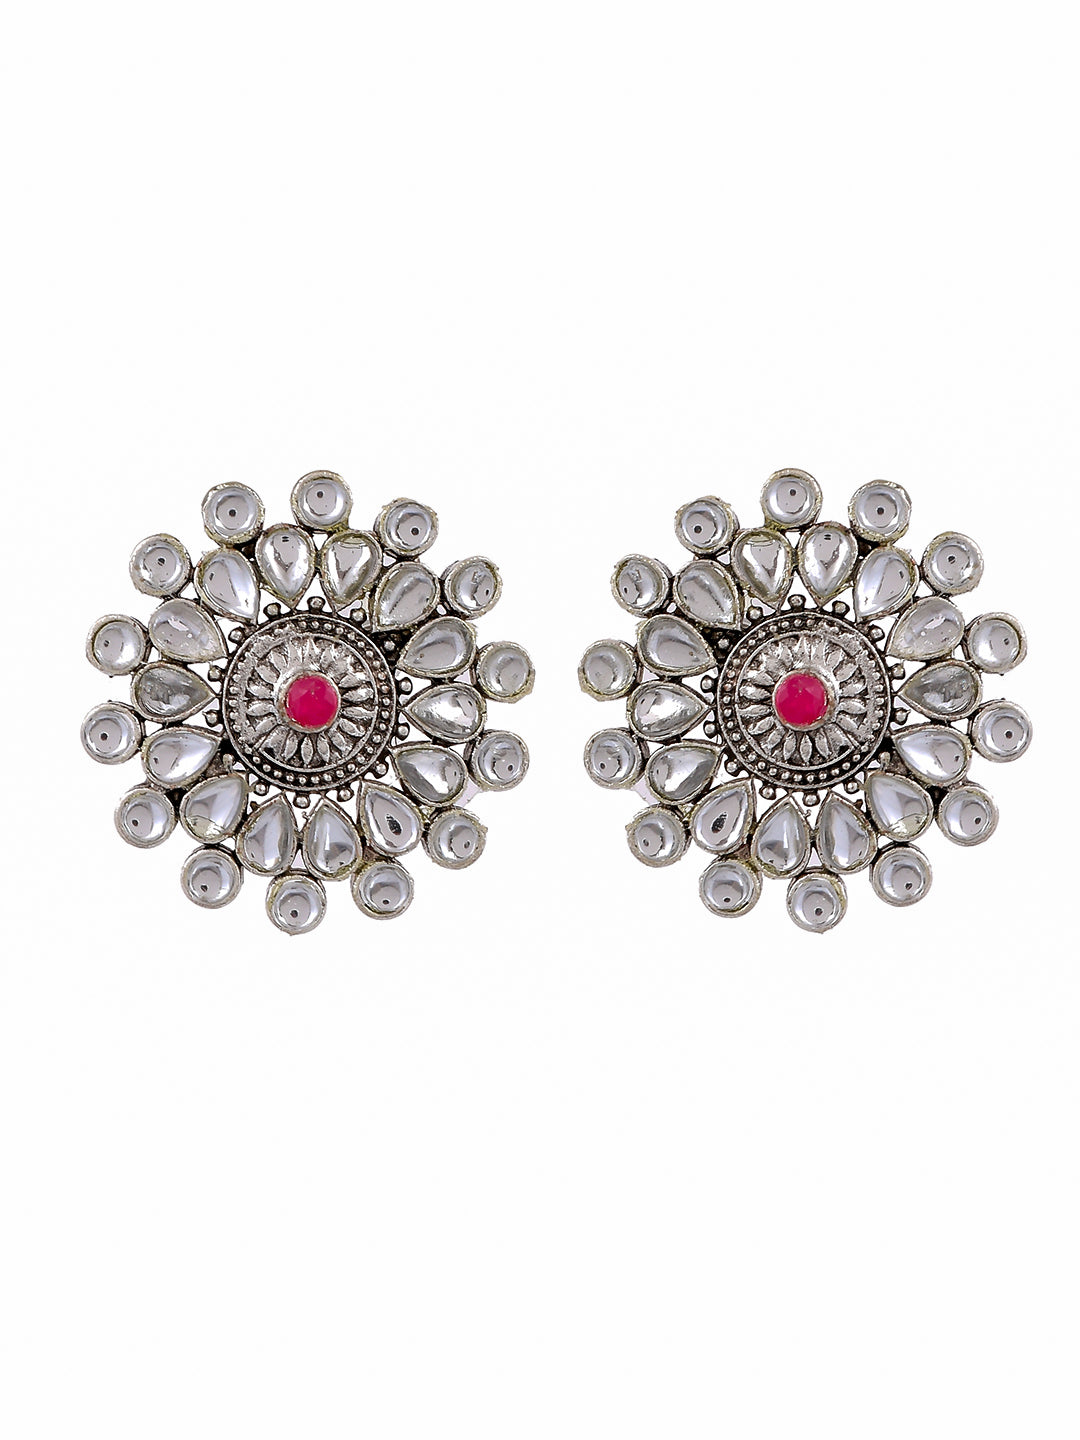 Kundan Antique Stud Earrings for Girls - Earrings for Women Online